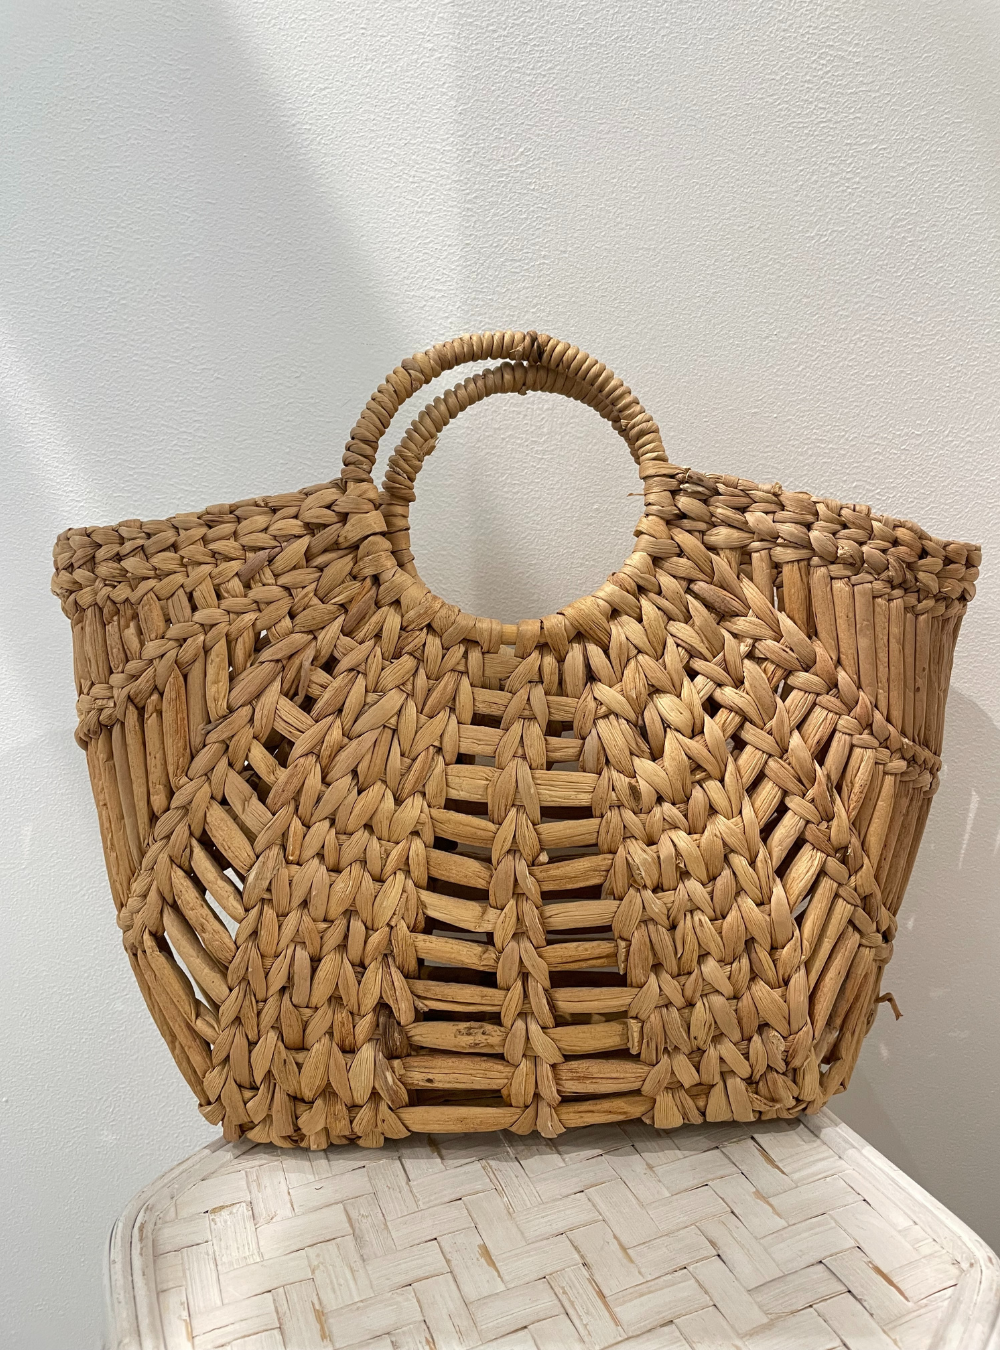 Plaited Basket - Woven Natural